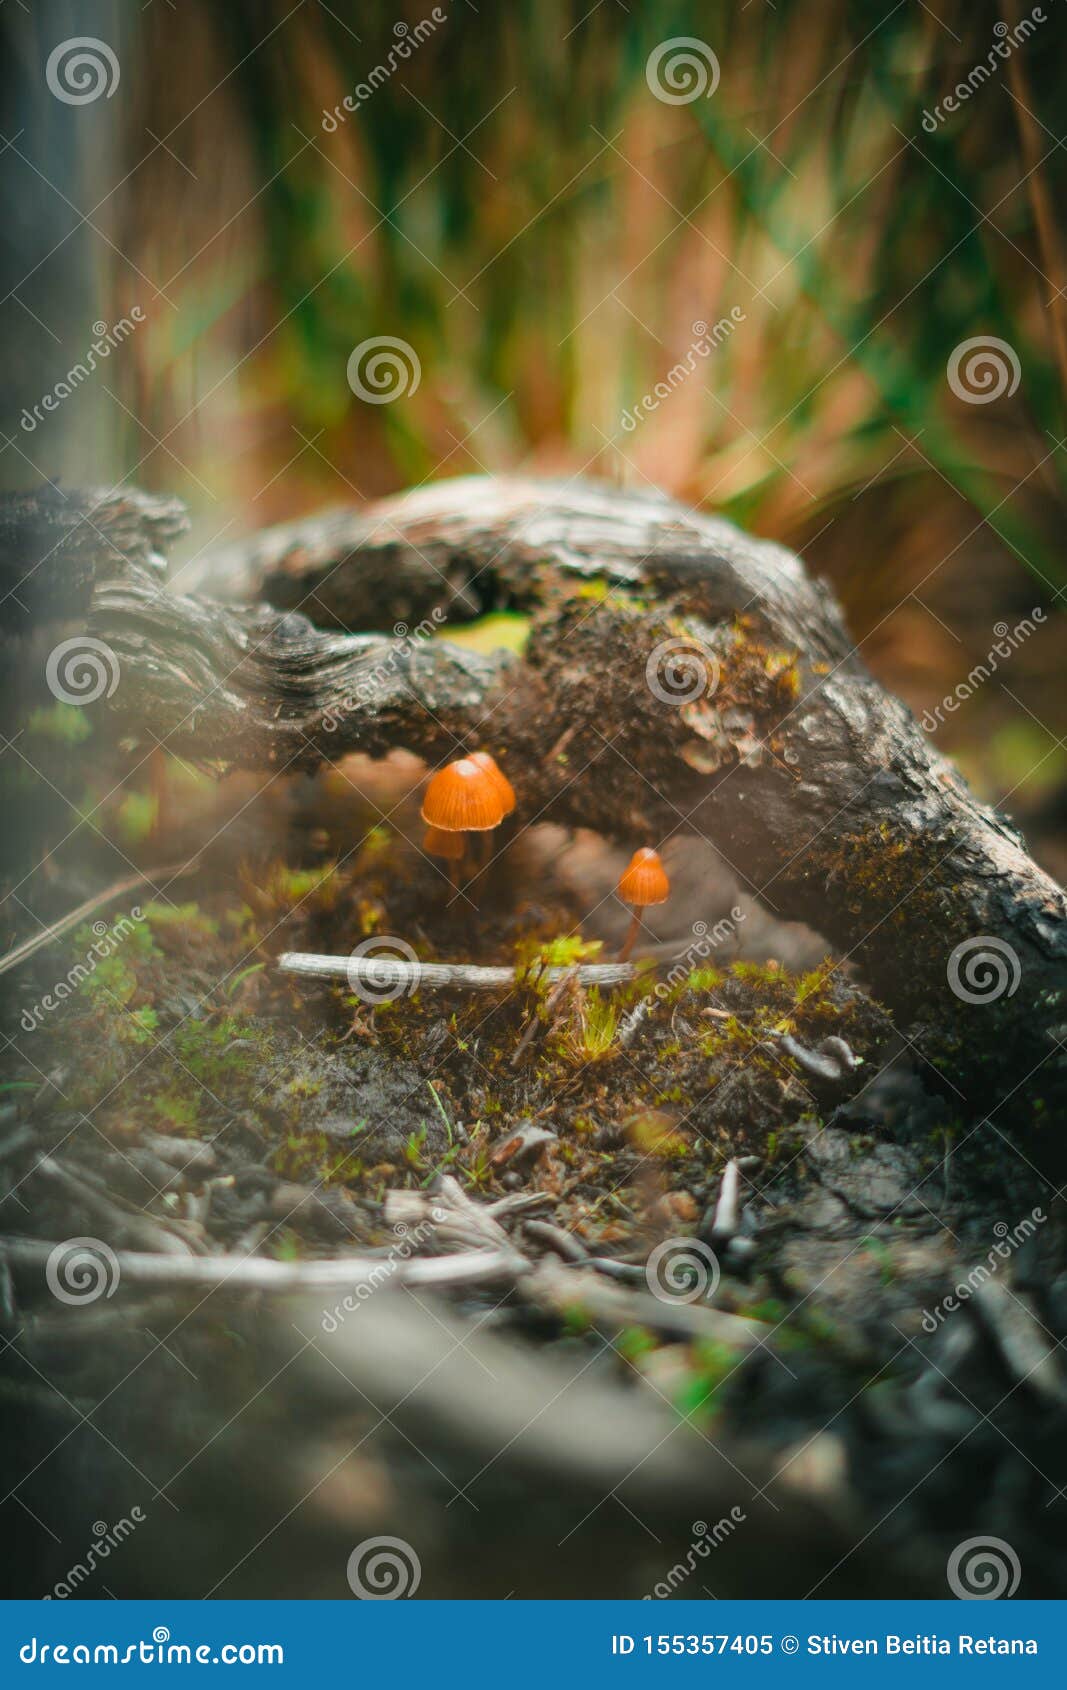 mushroom mushroom in the forest. macro photography.